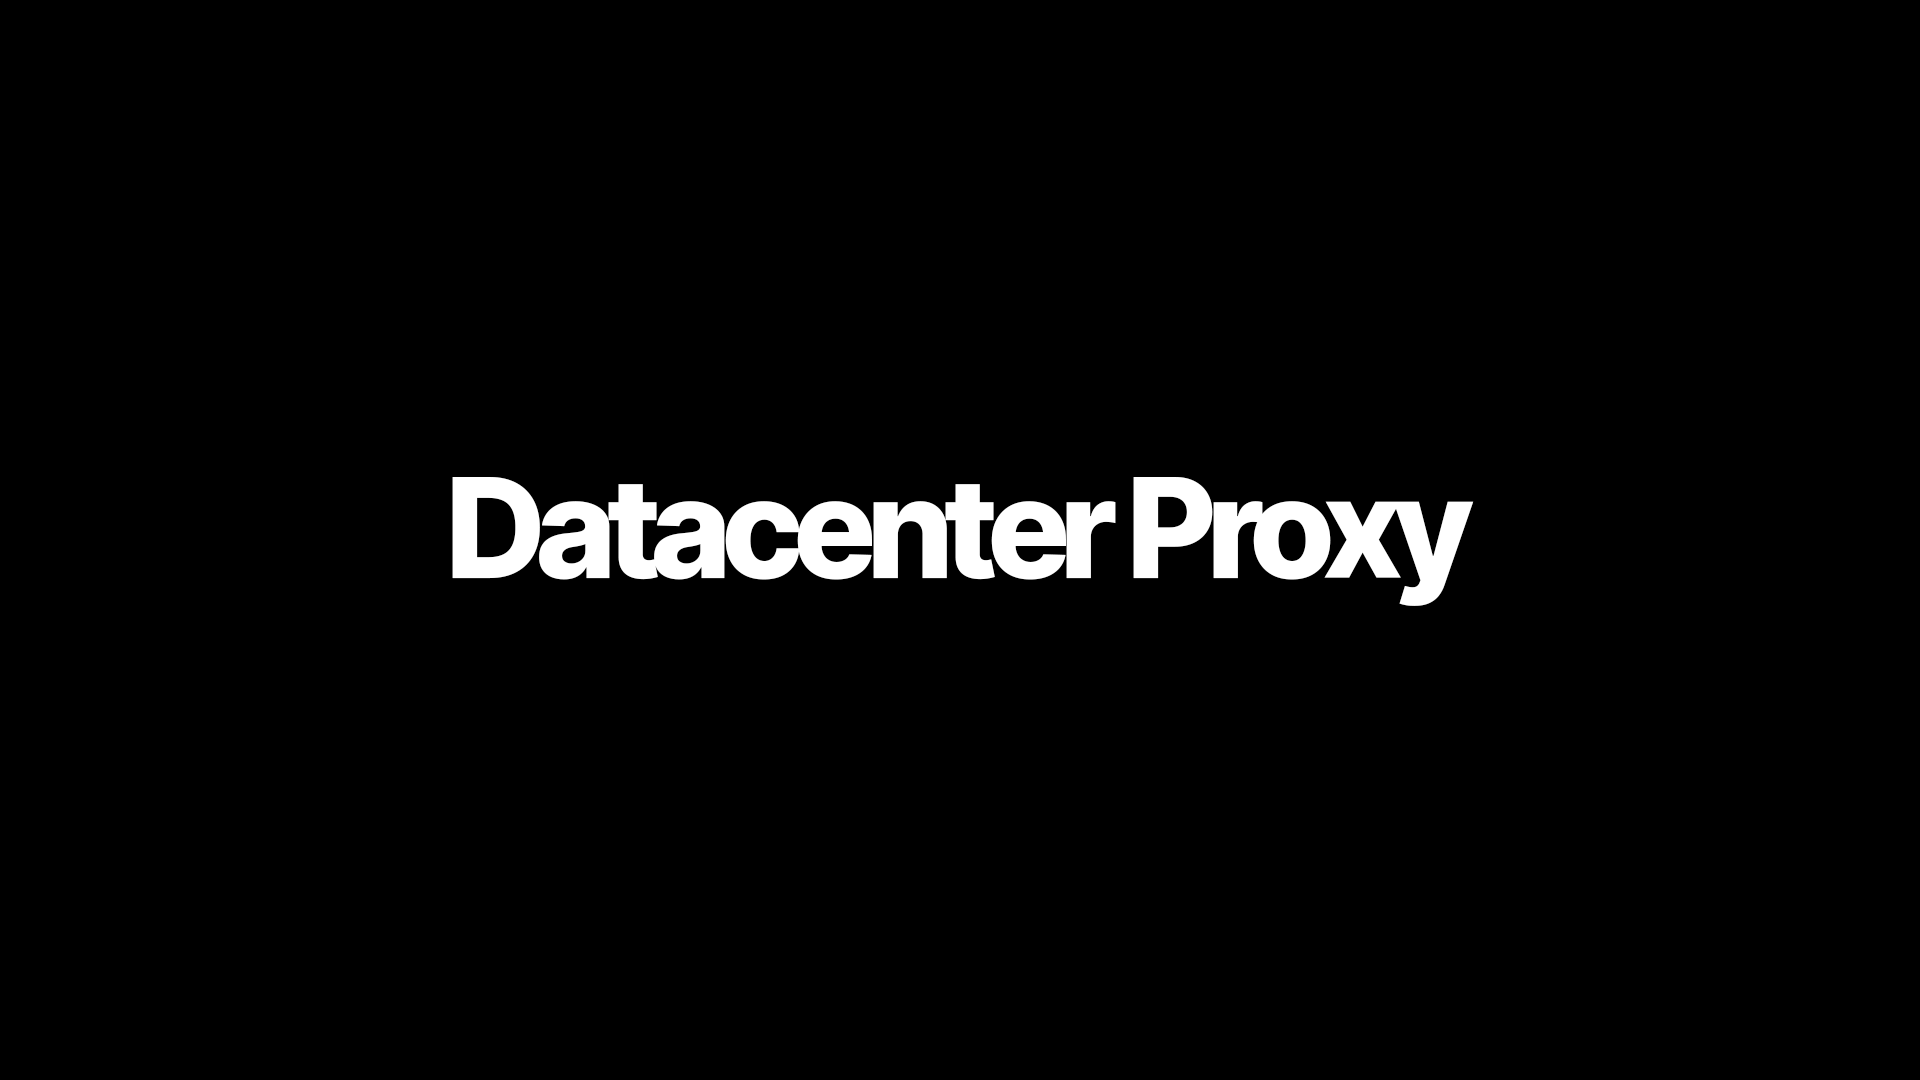 Datacenter Proxy